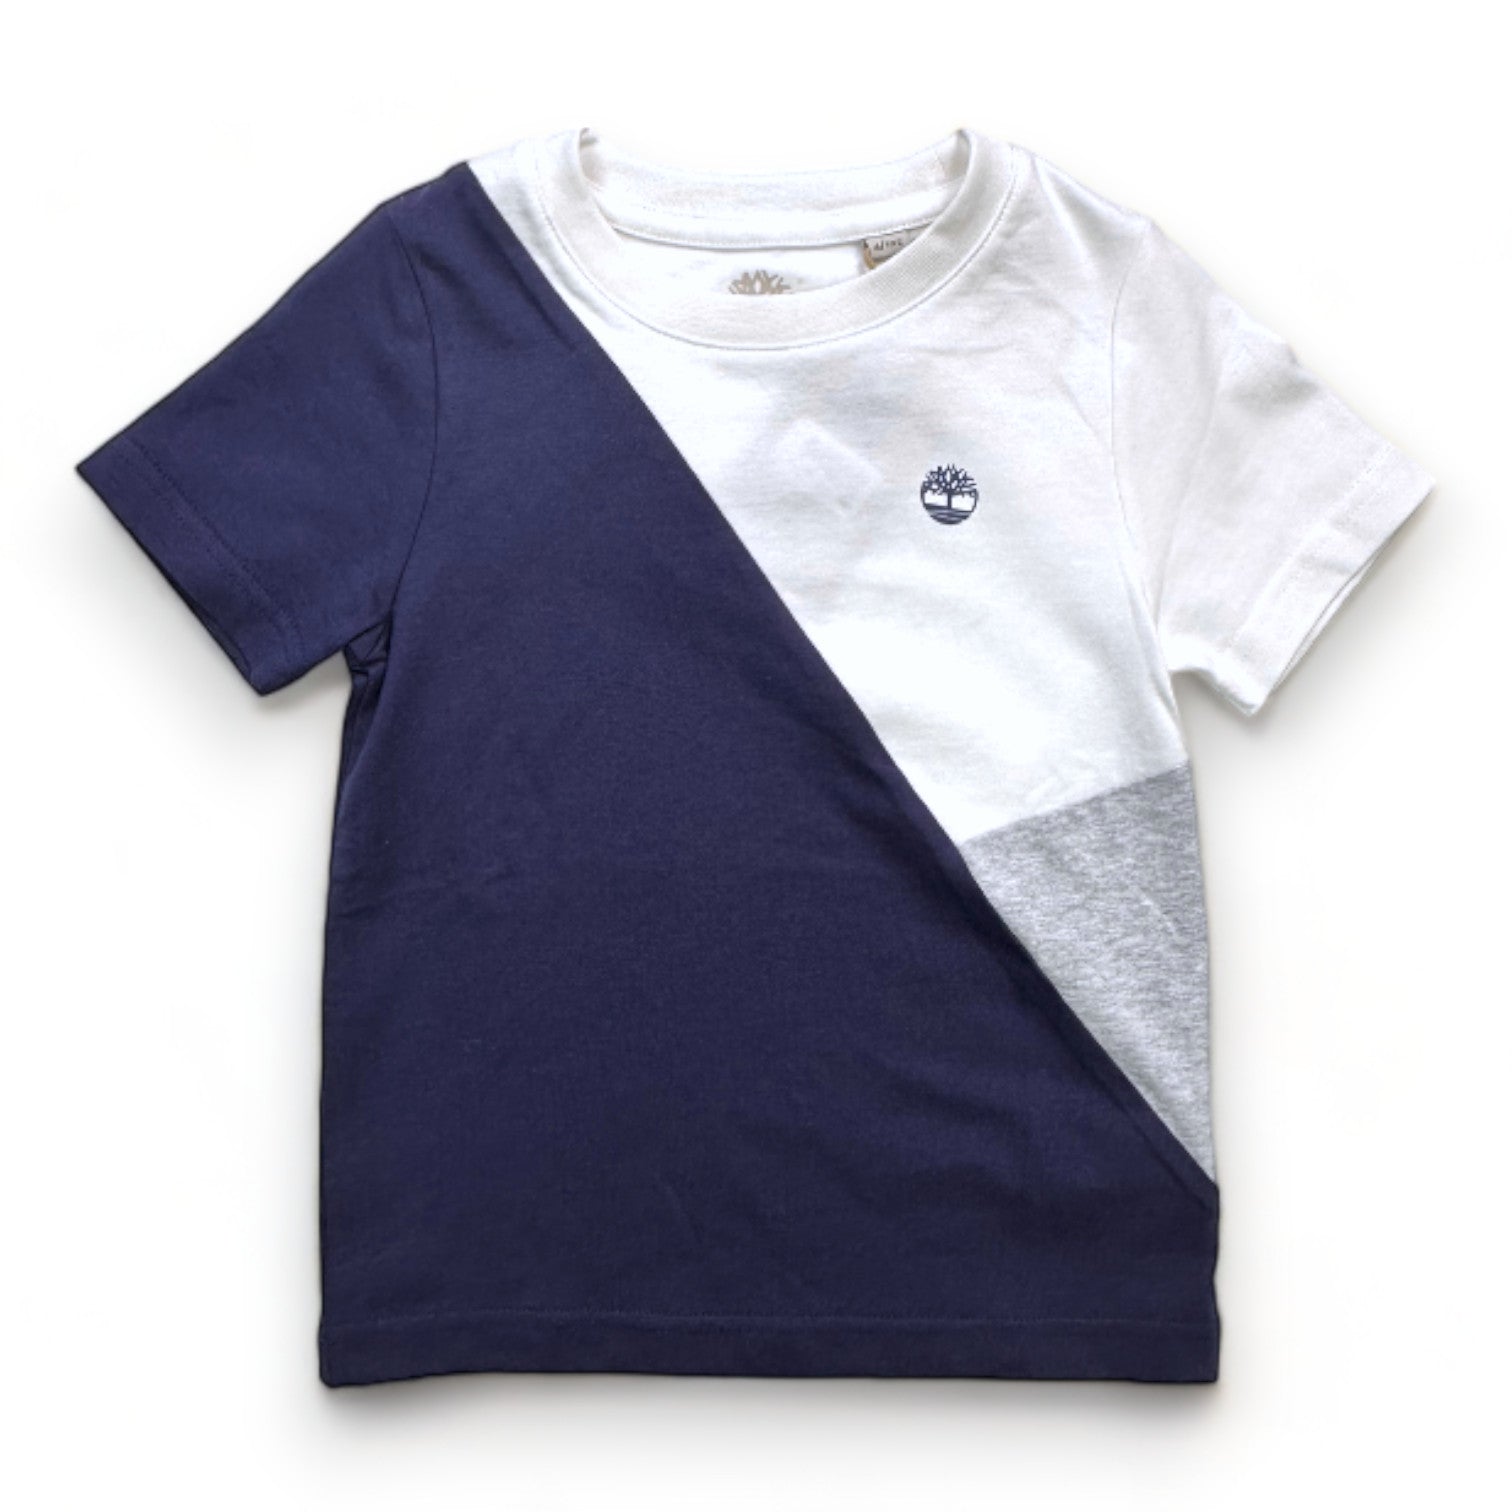 TIMBERLAND - T-shirt blanc bleu et gris neuf - 4 ans